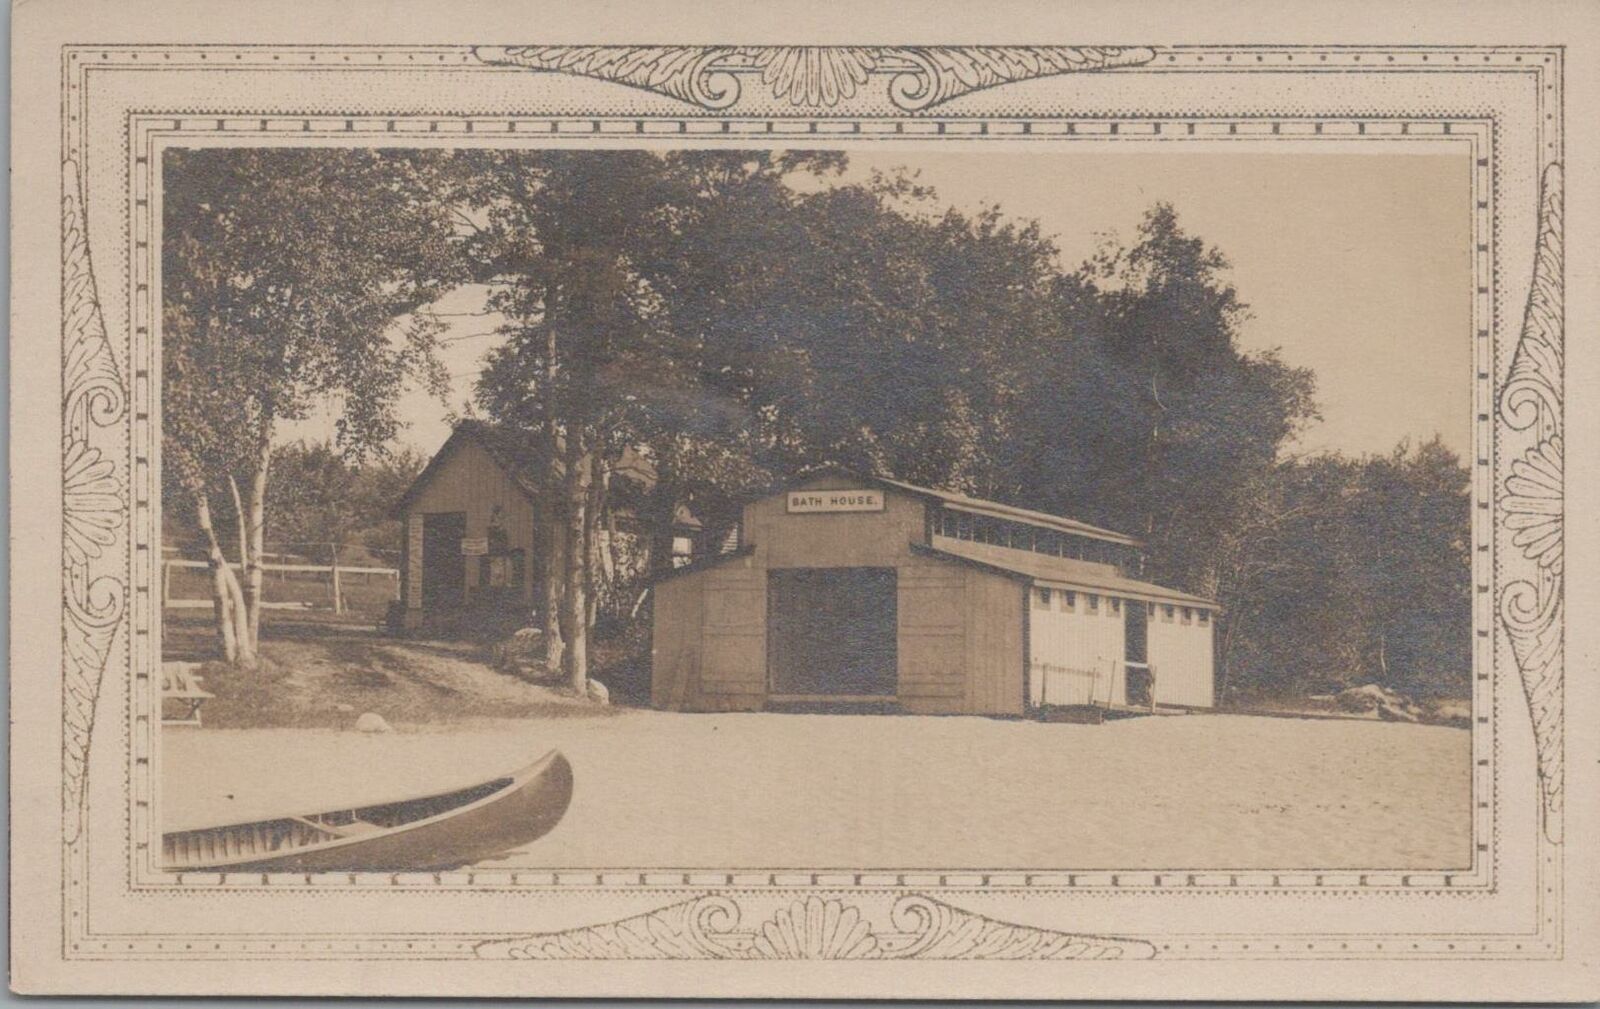 RPPC Postcard Americana Boat + Bath House c. 1920s